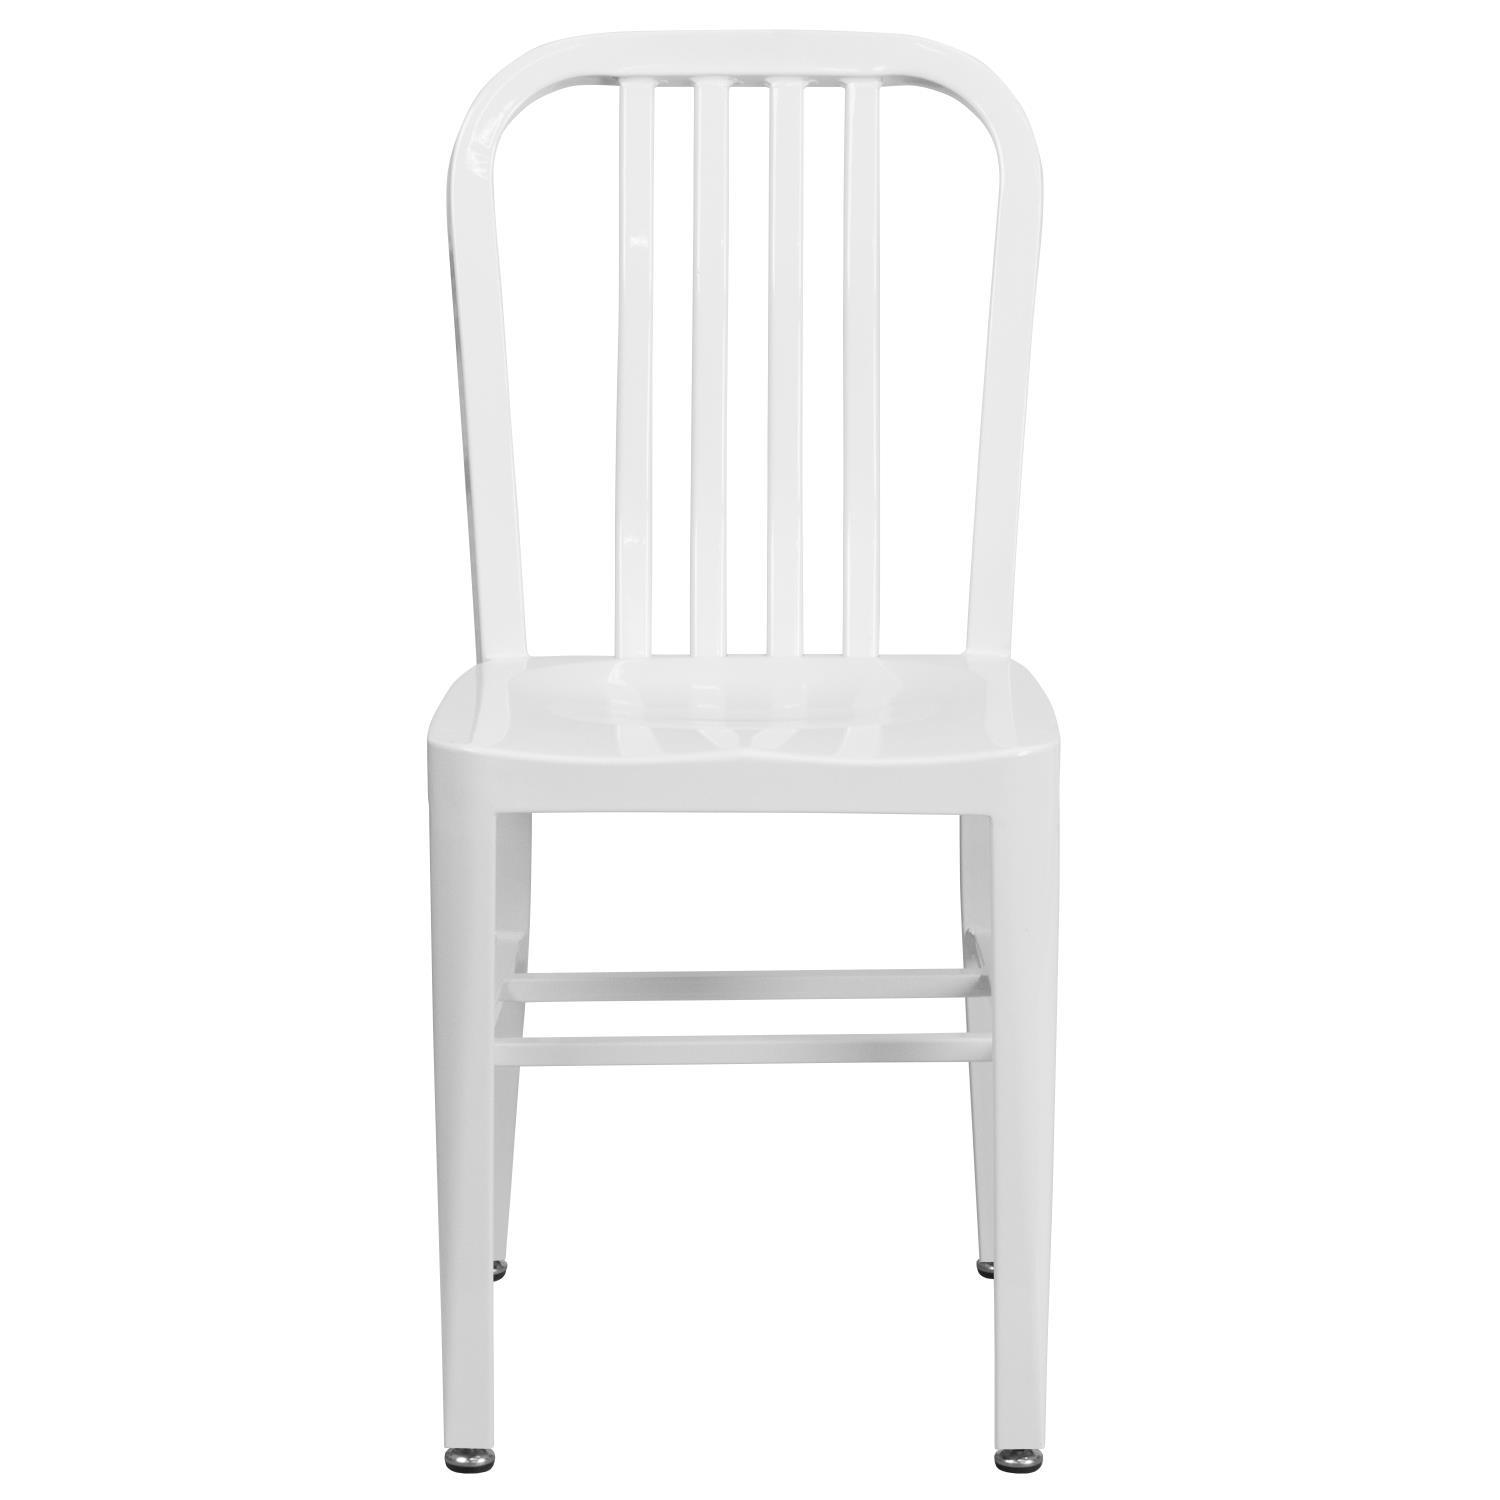 Flash Furniture White Metal Indoor-Outdoor Chair